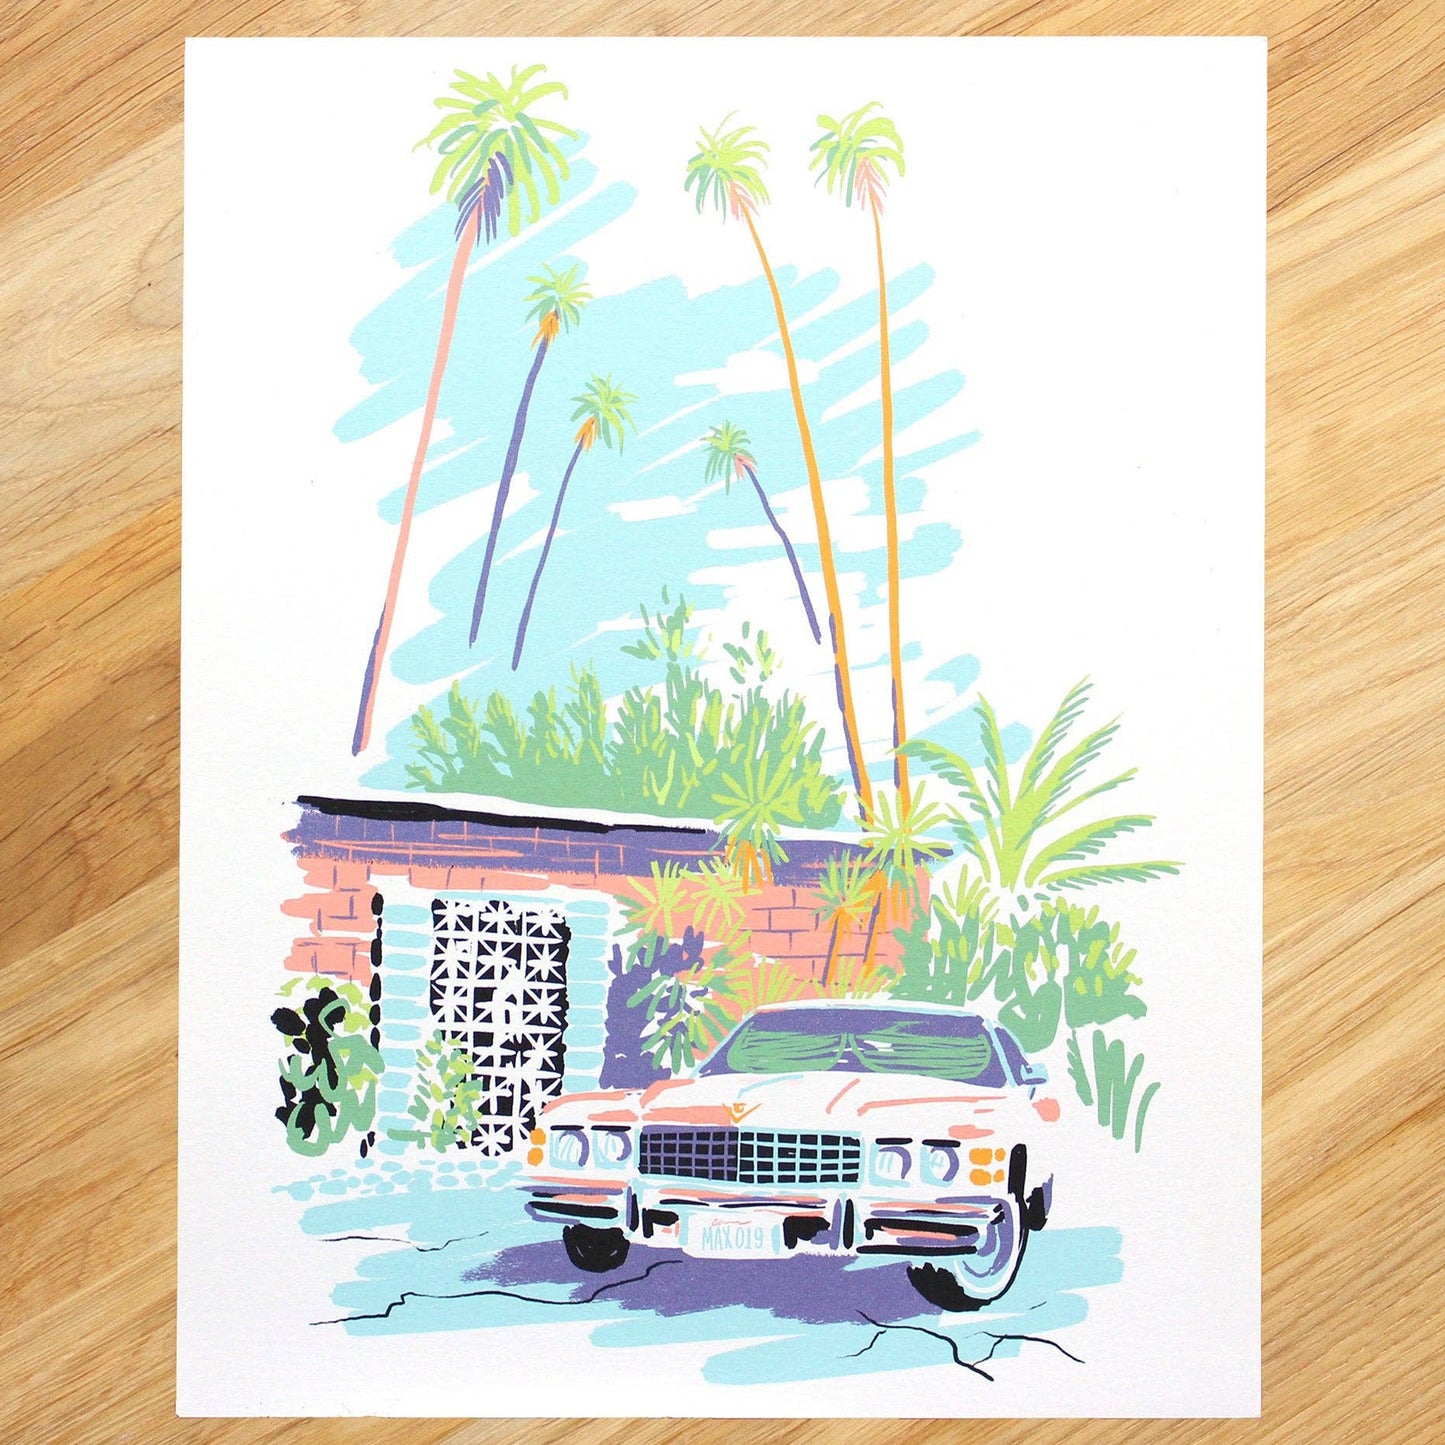 LÁMINA - I never draw, LOS ANGELES VINTAGE CARS